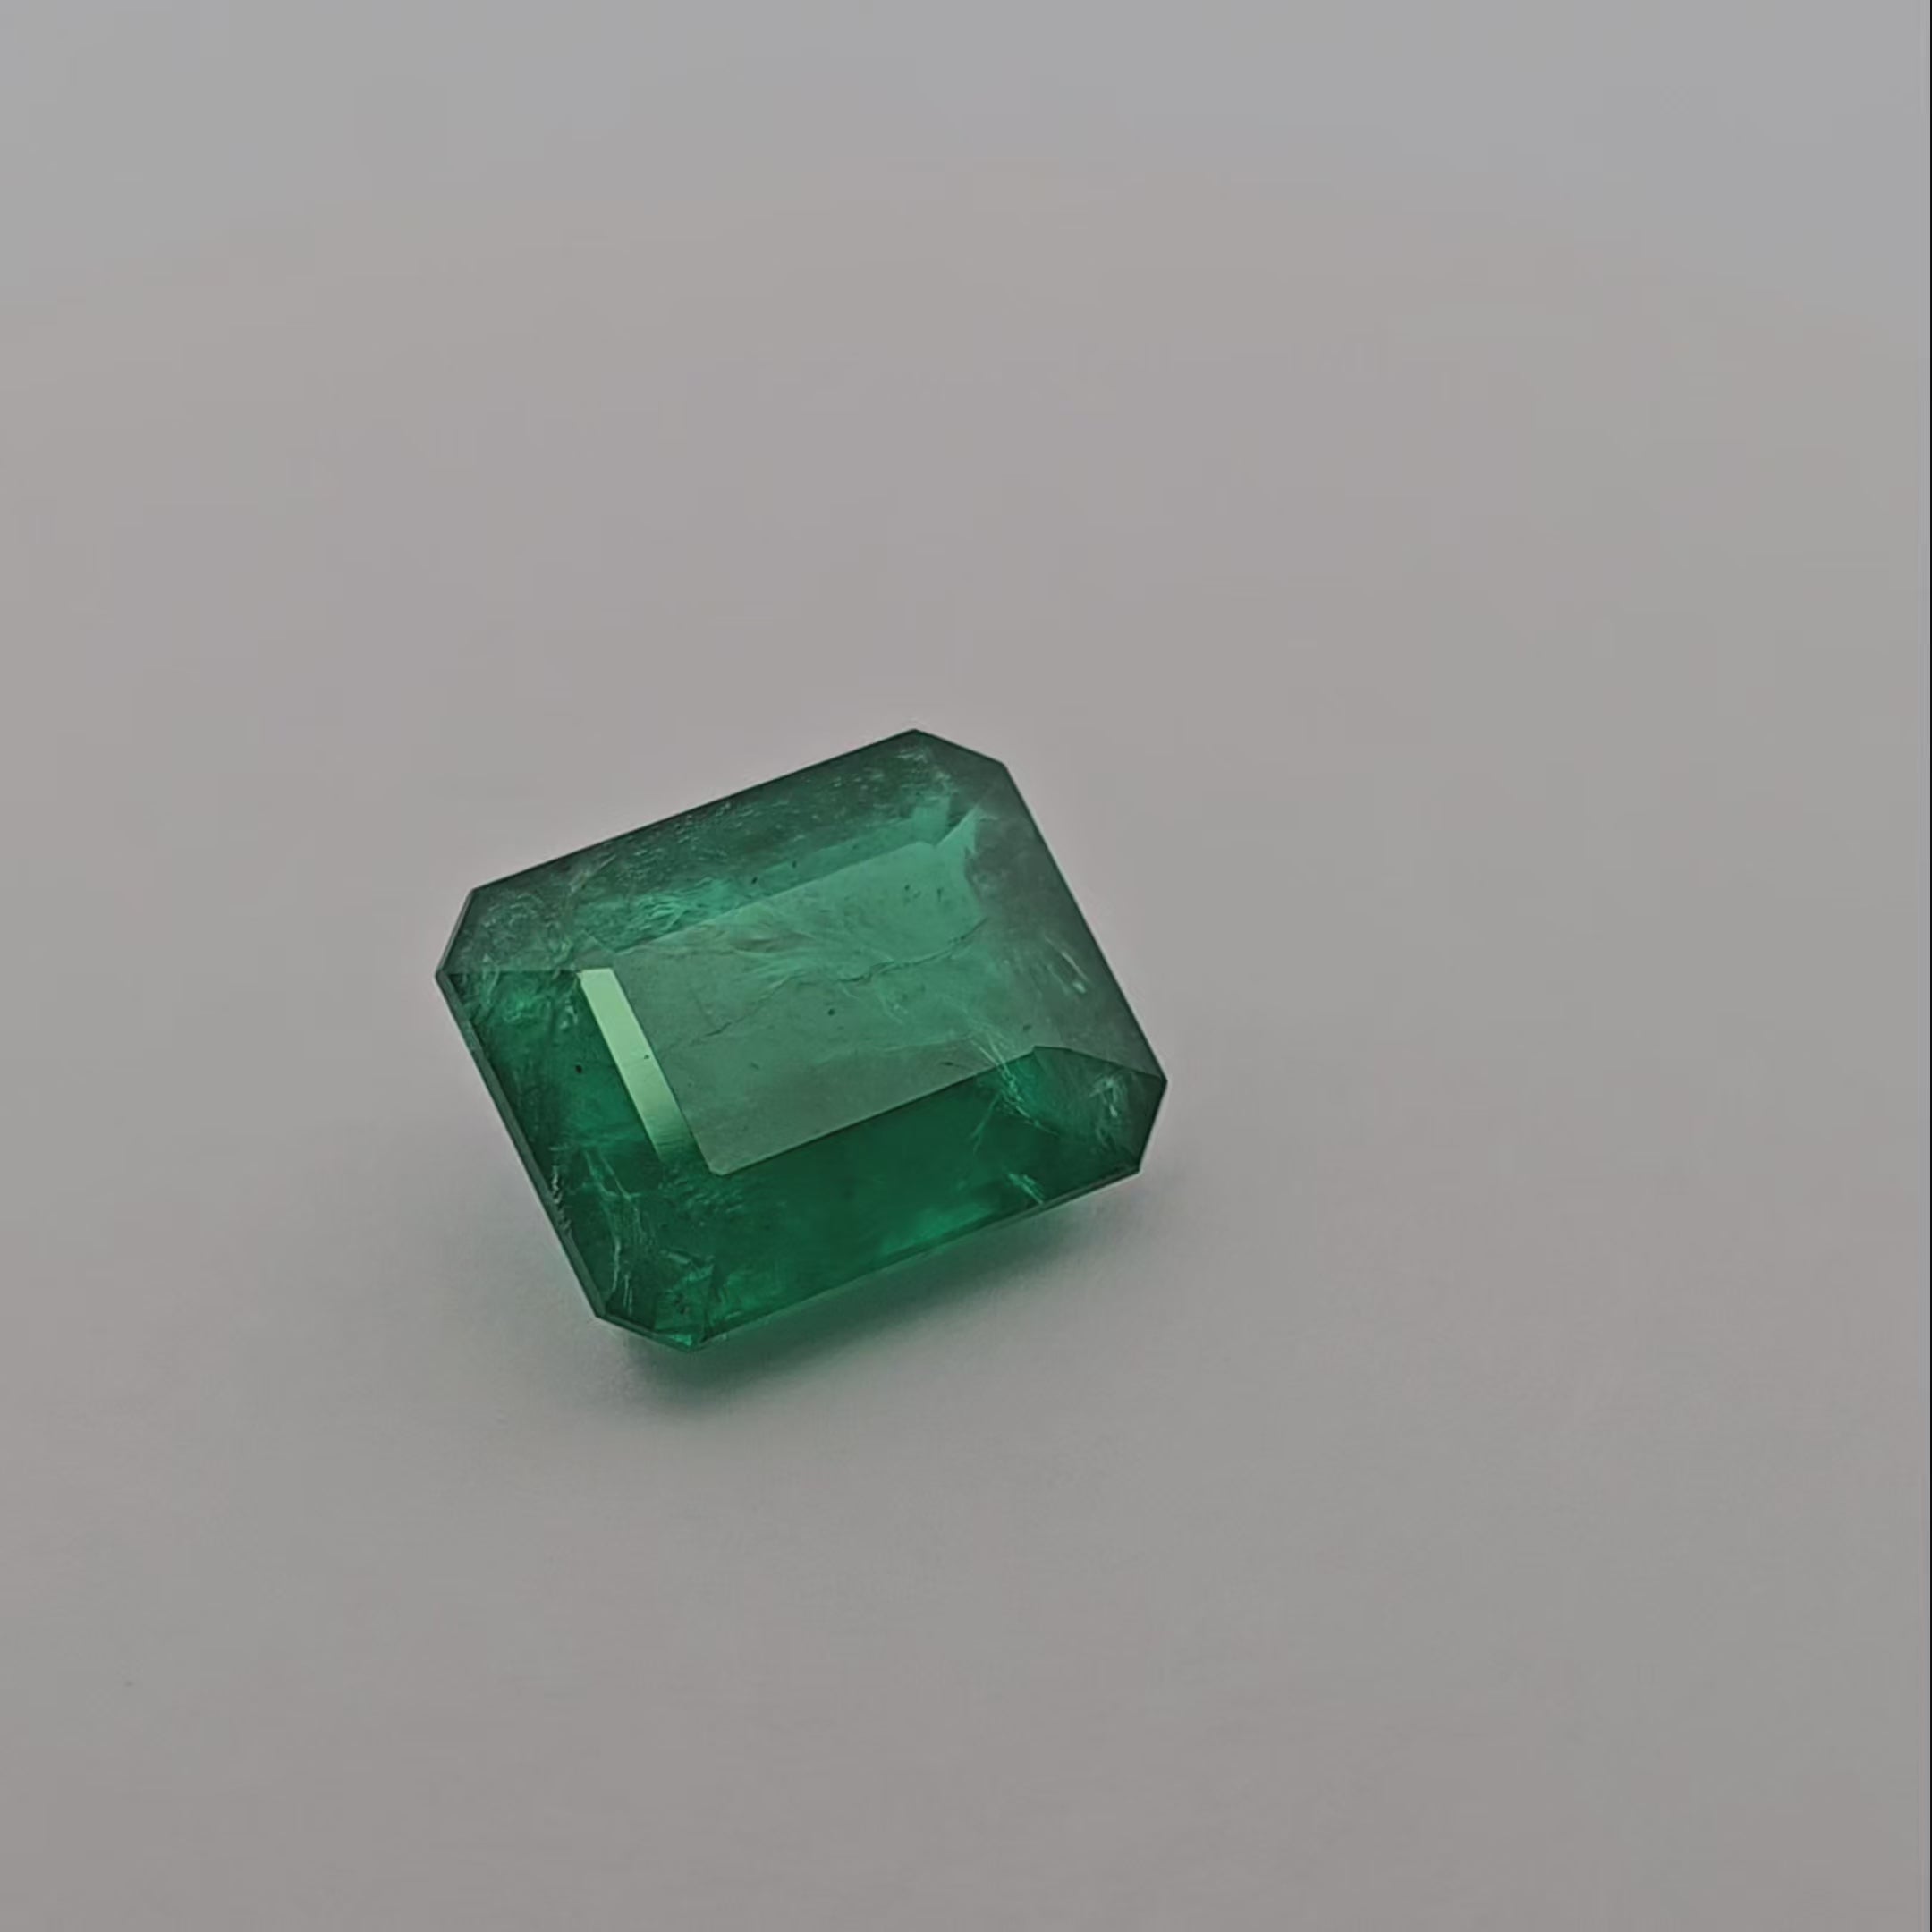 Natural Zambian Emerald Stone 9.51 Carats Emerald Cut 14.17 x 11.61 x 7.13 mm